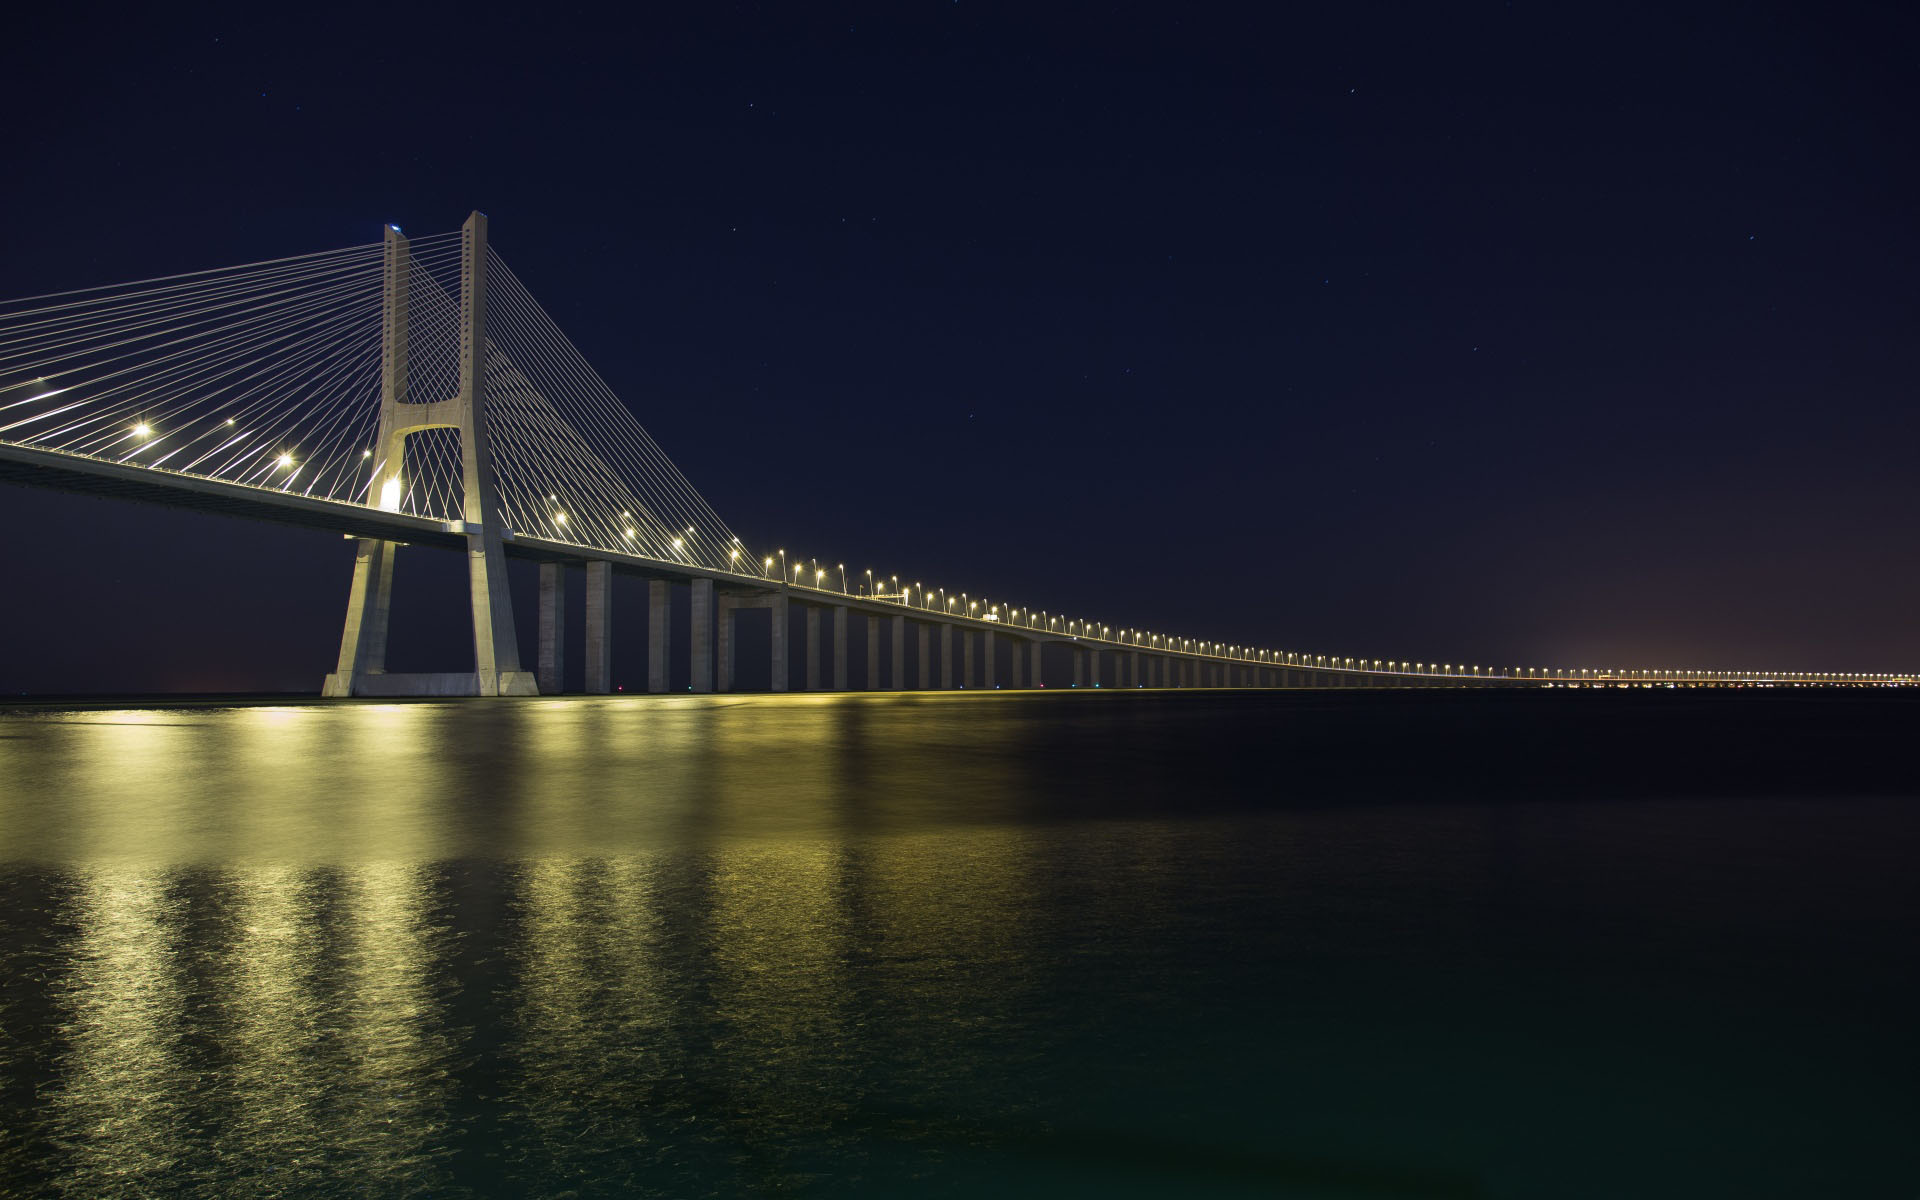 Vasco da Gama bridge in the night